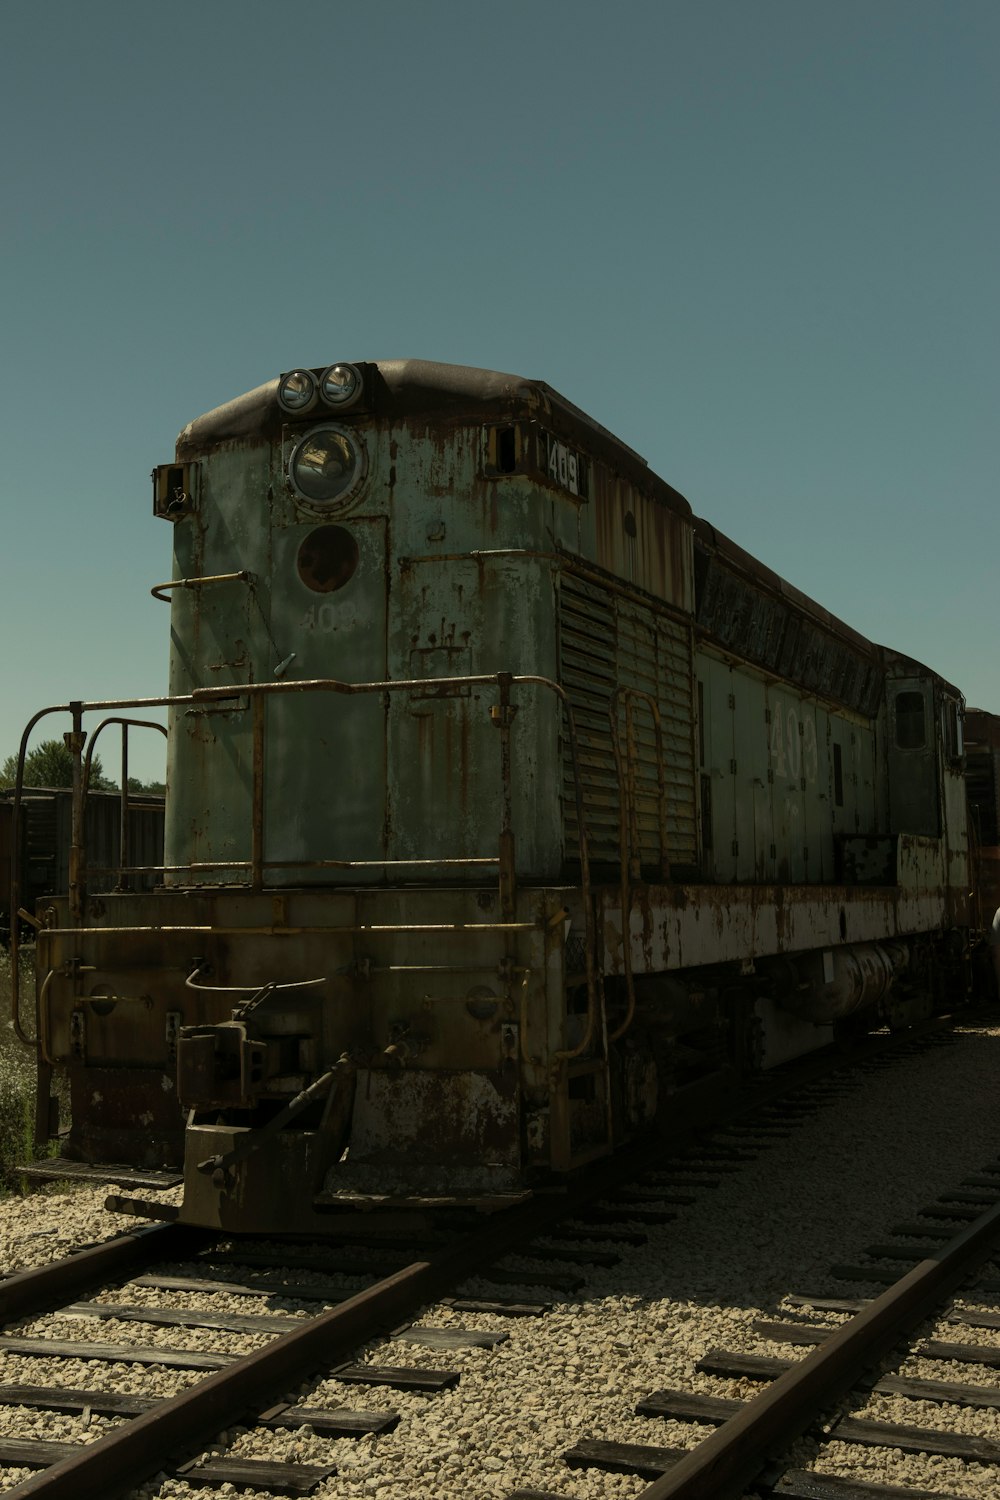 brown train on rail tracks during daytime